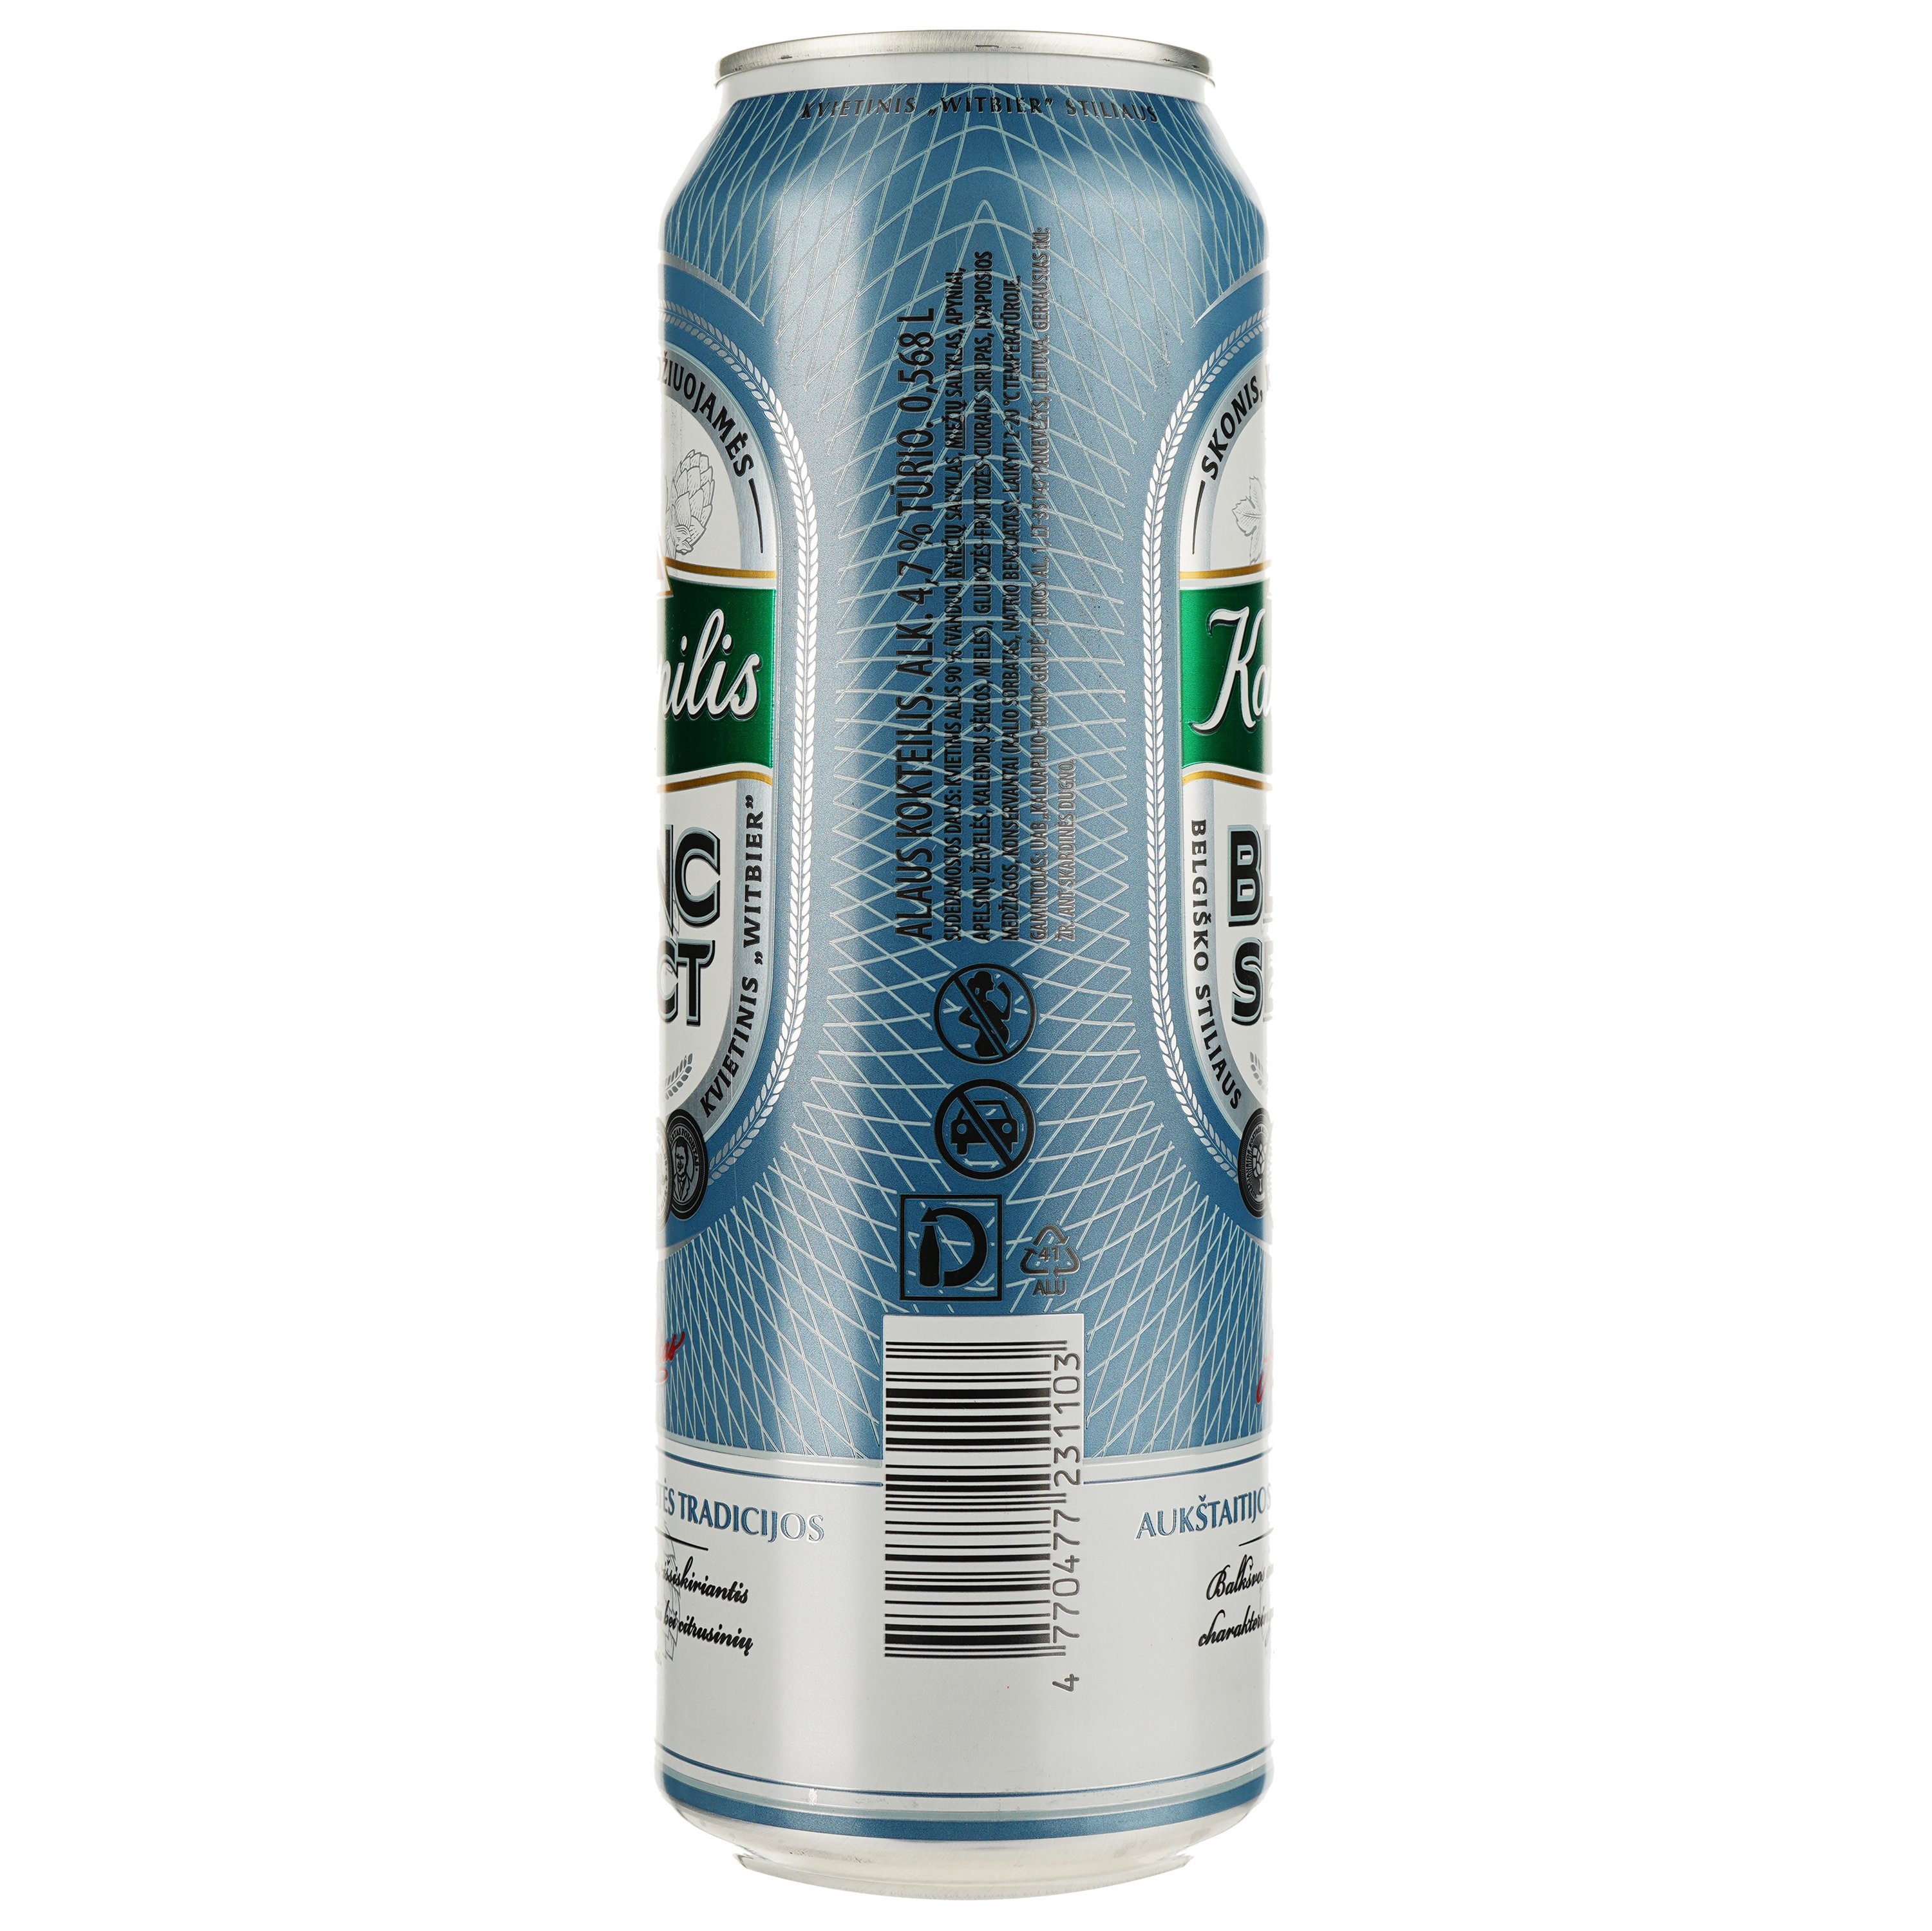 Пиво Kalnapilis Blanc Select светлое 5% 0.568 л ж/б - фото 2